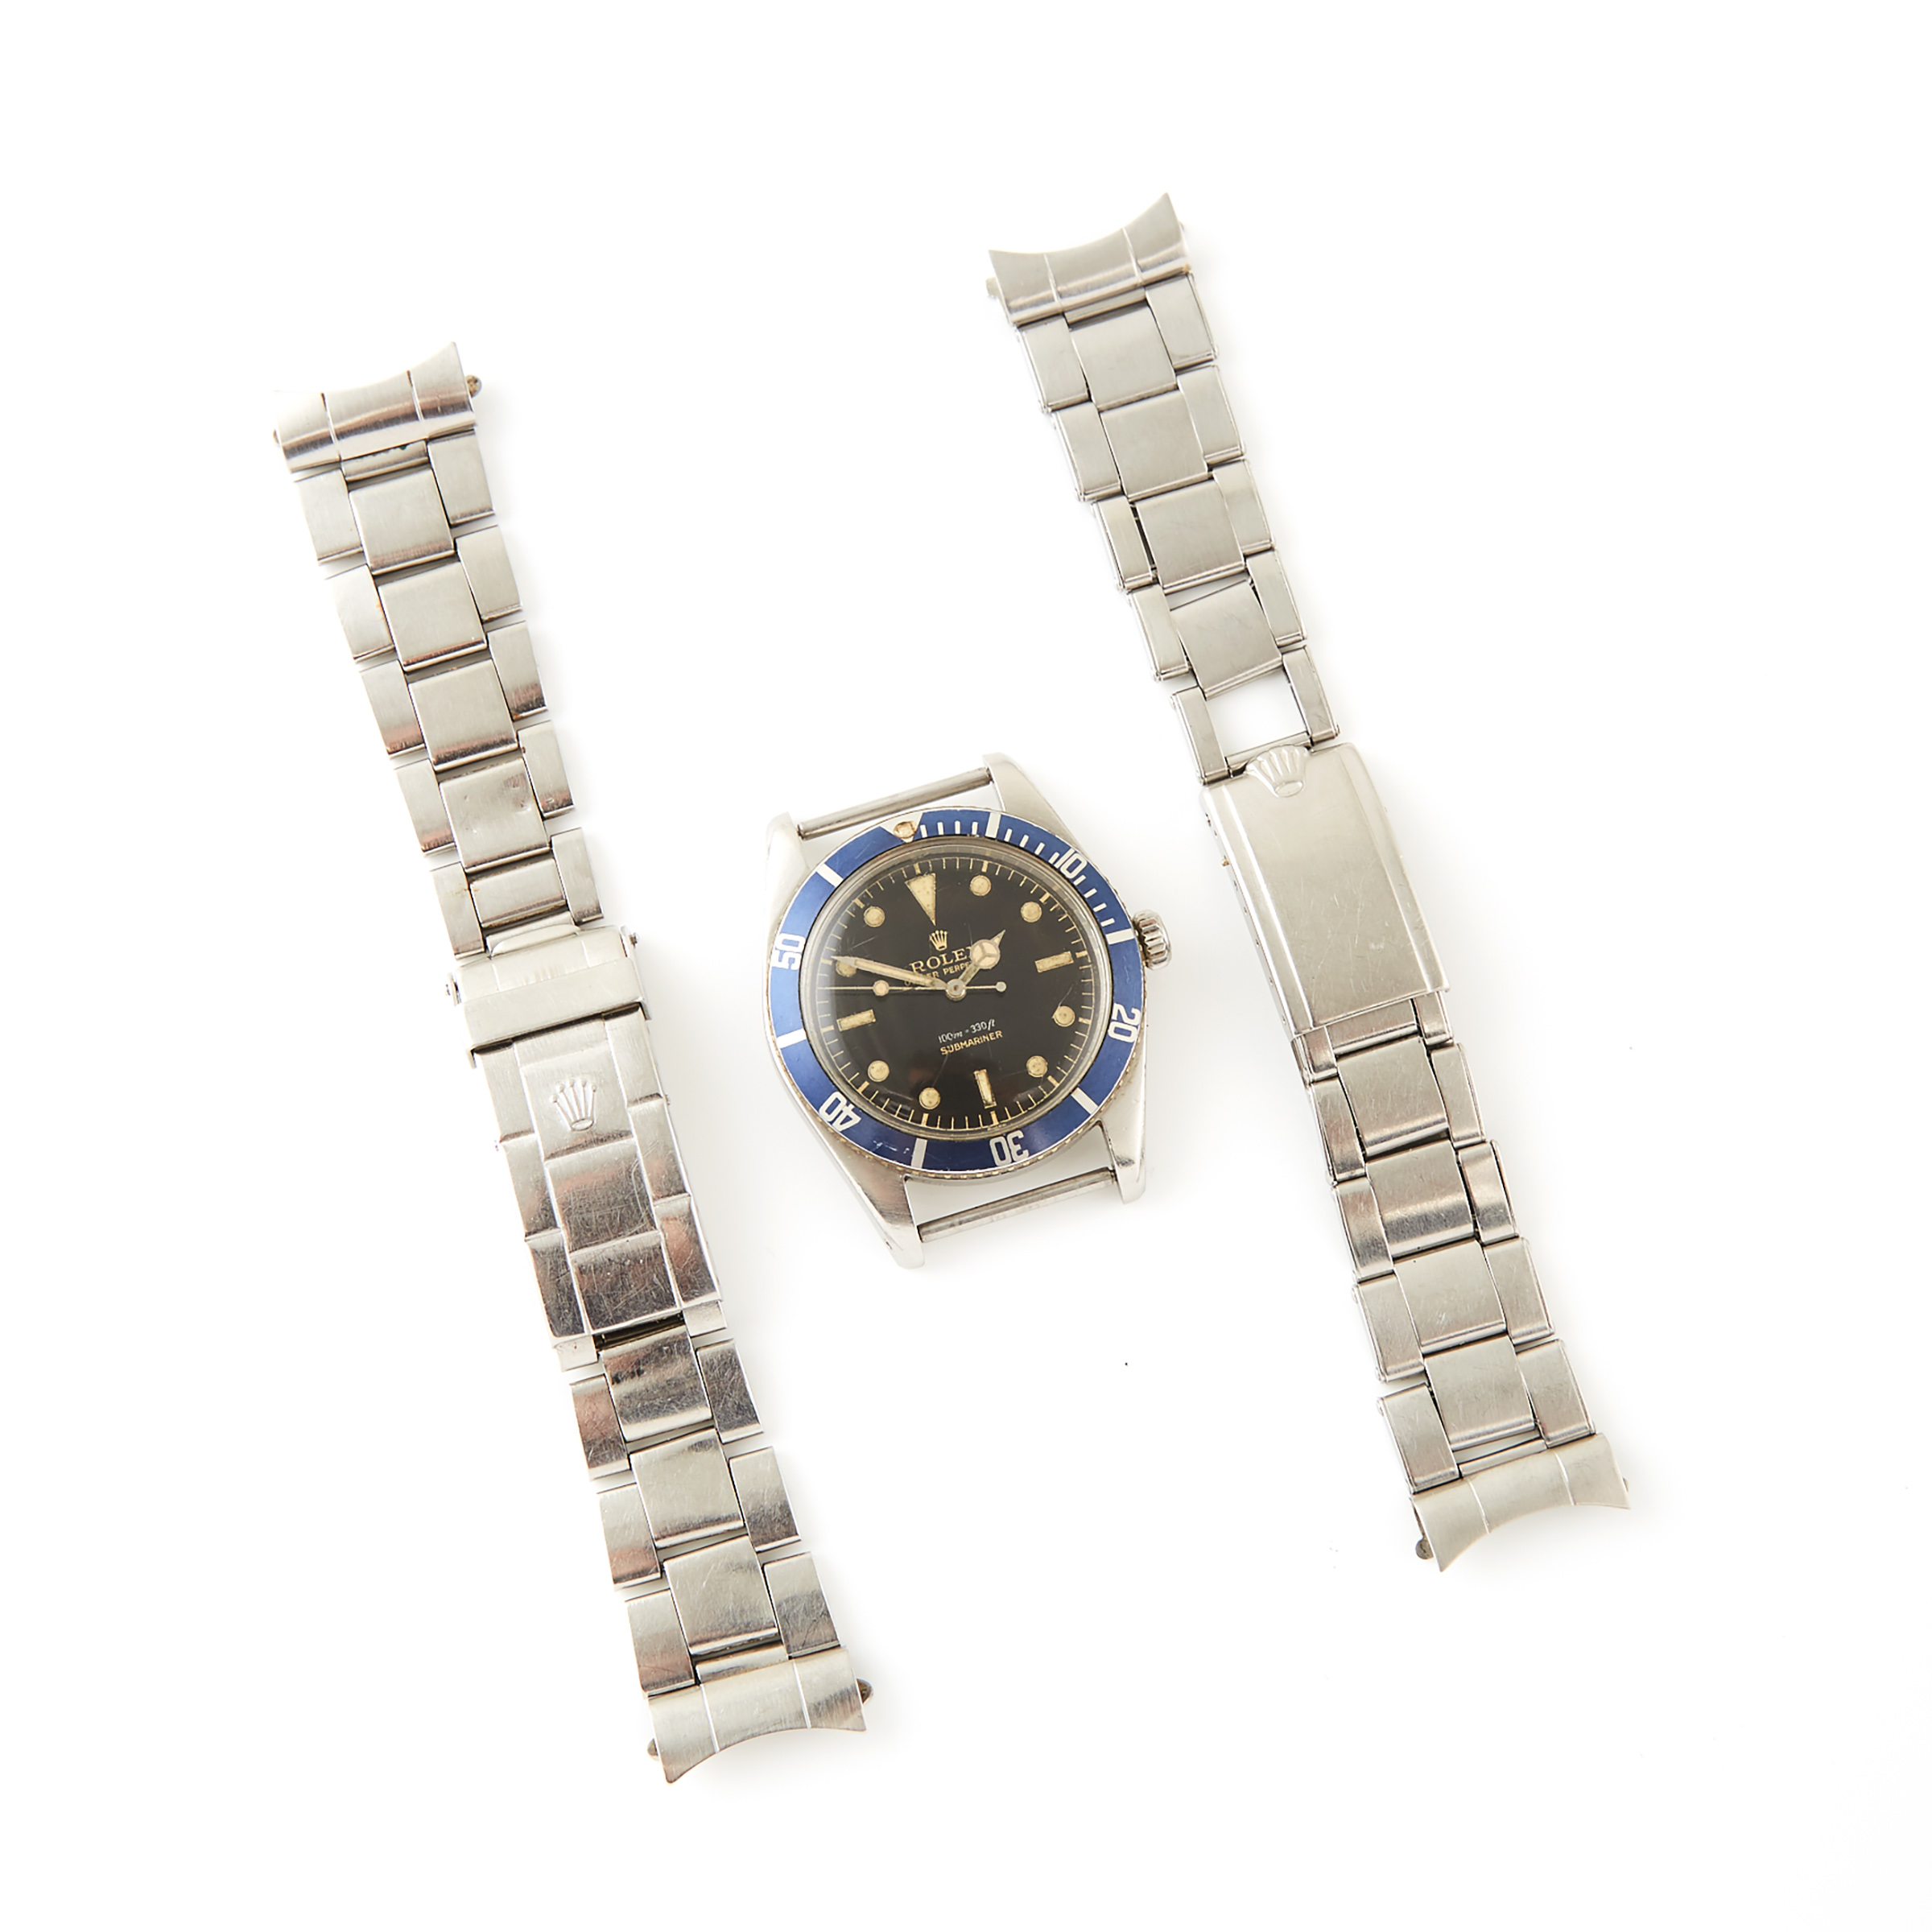 Rolex Oyster Perpetual “James Bond” Submariner Wristwatch